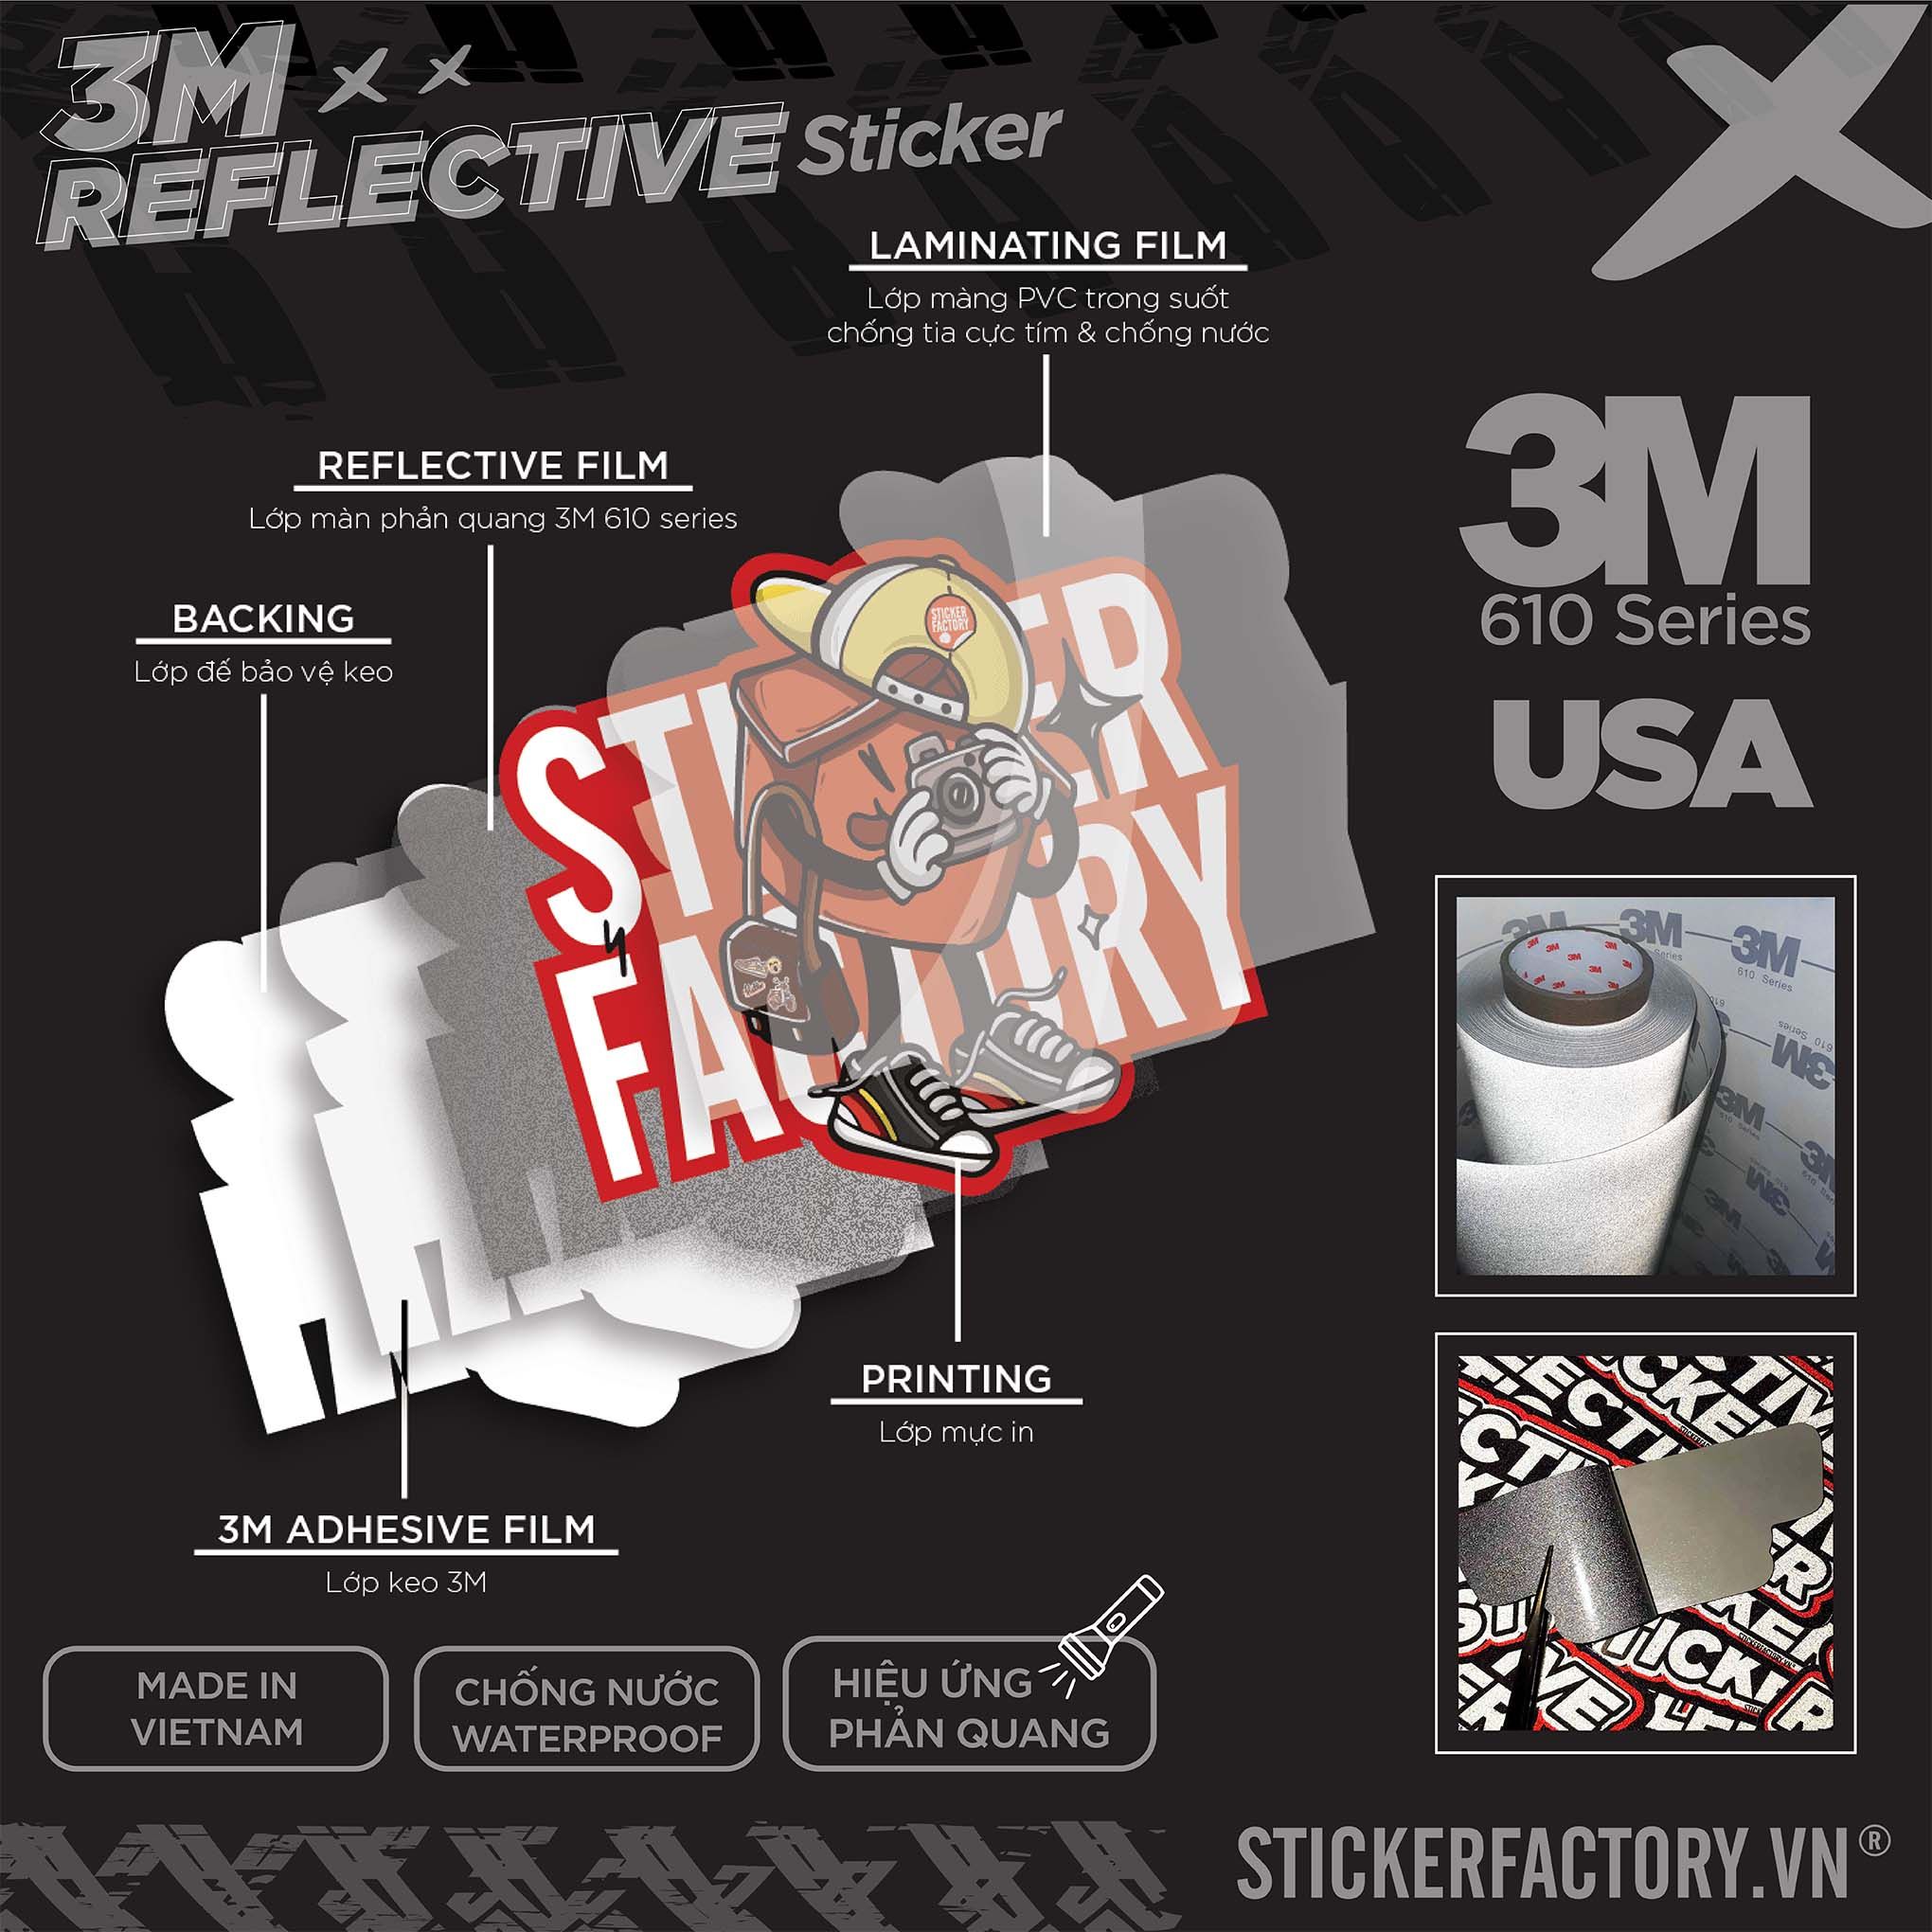 FULL THROTTLE MOTORCYCLE LOGO 3M - Reflective Sticker Die-cut